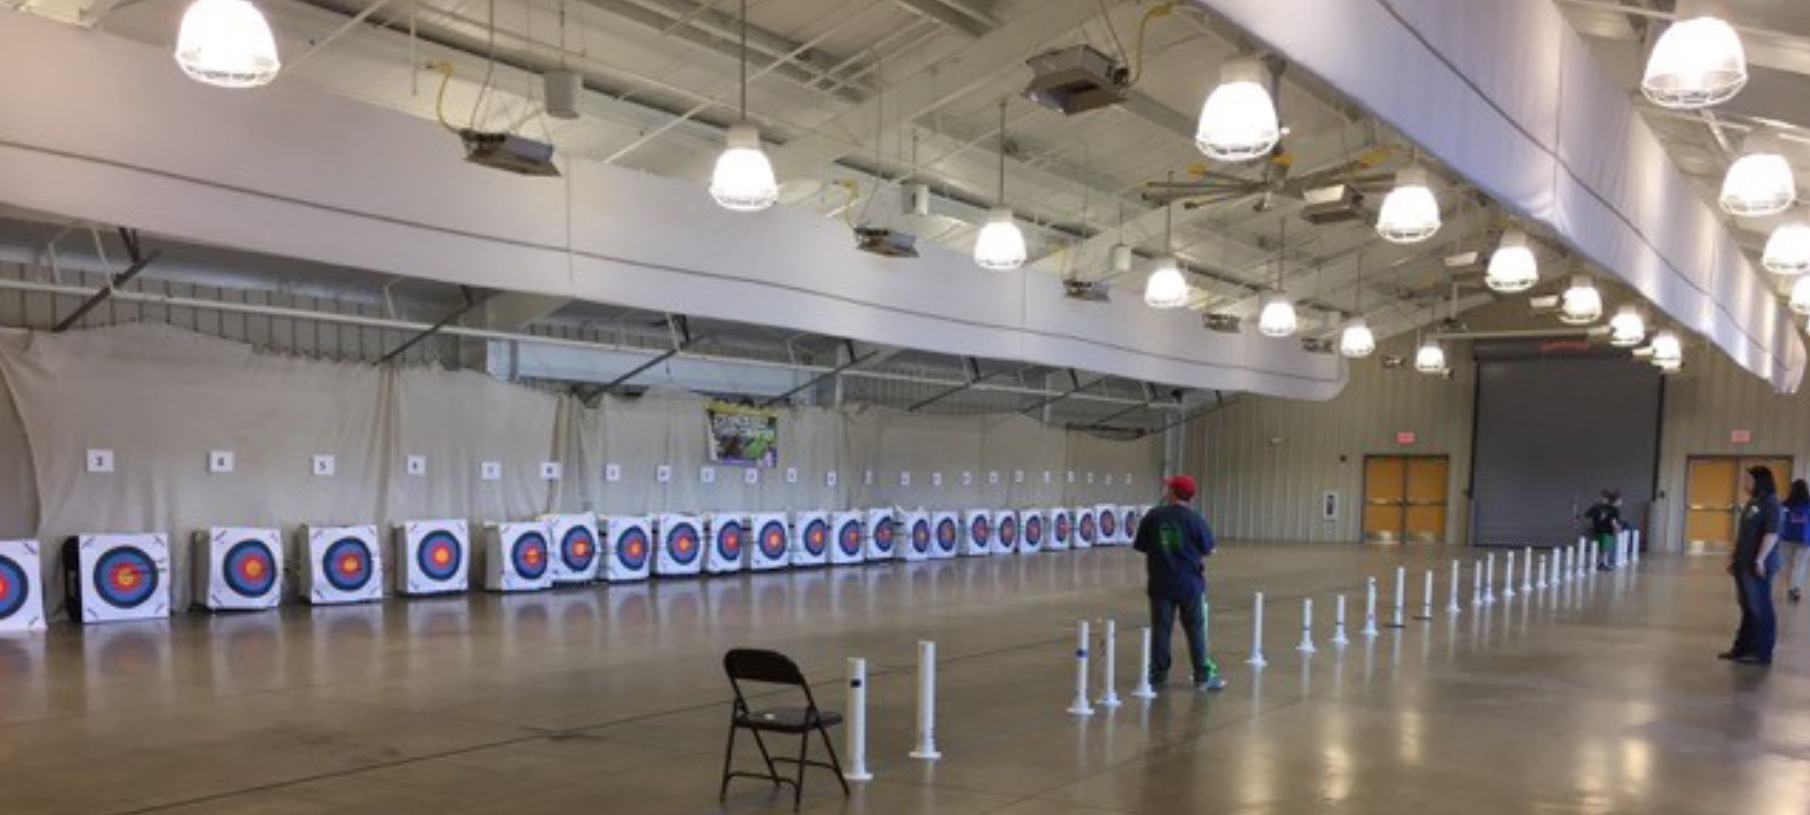 Shooting Sports - Archery